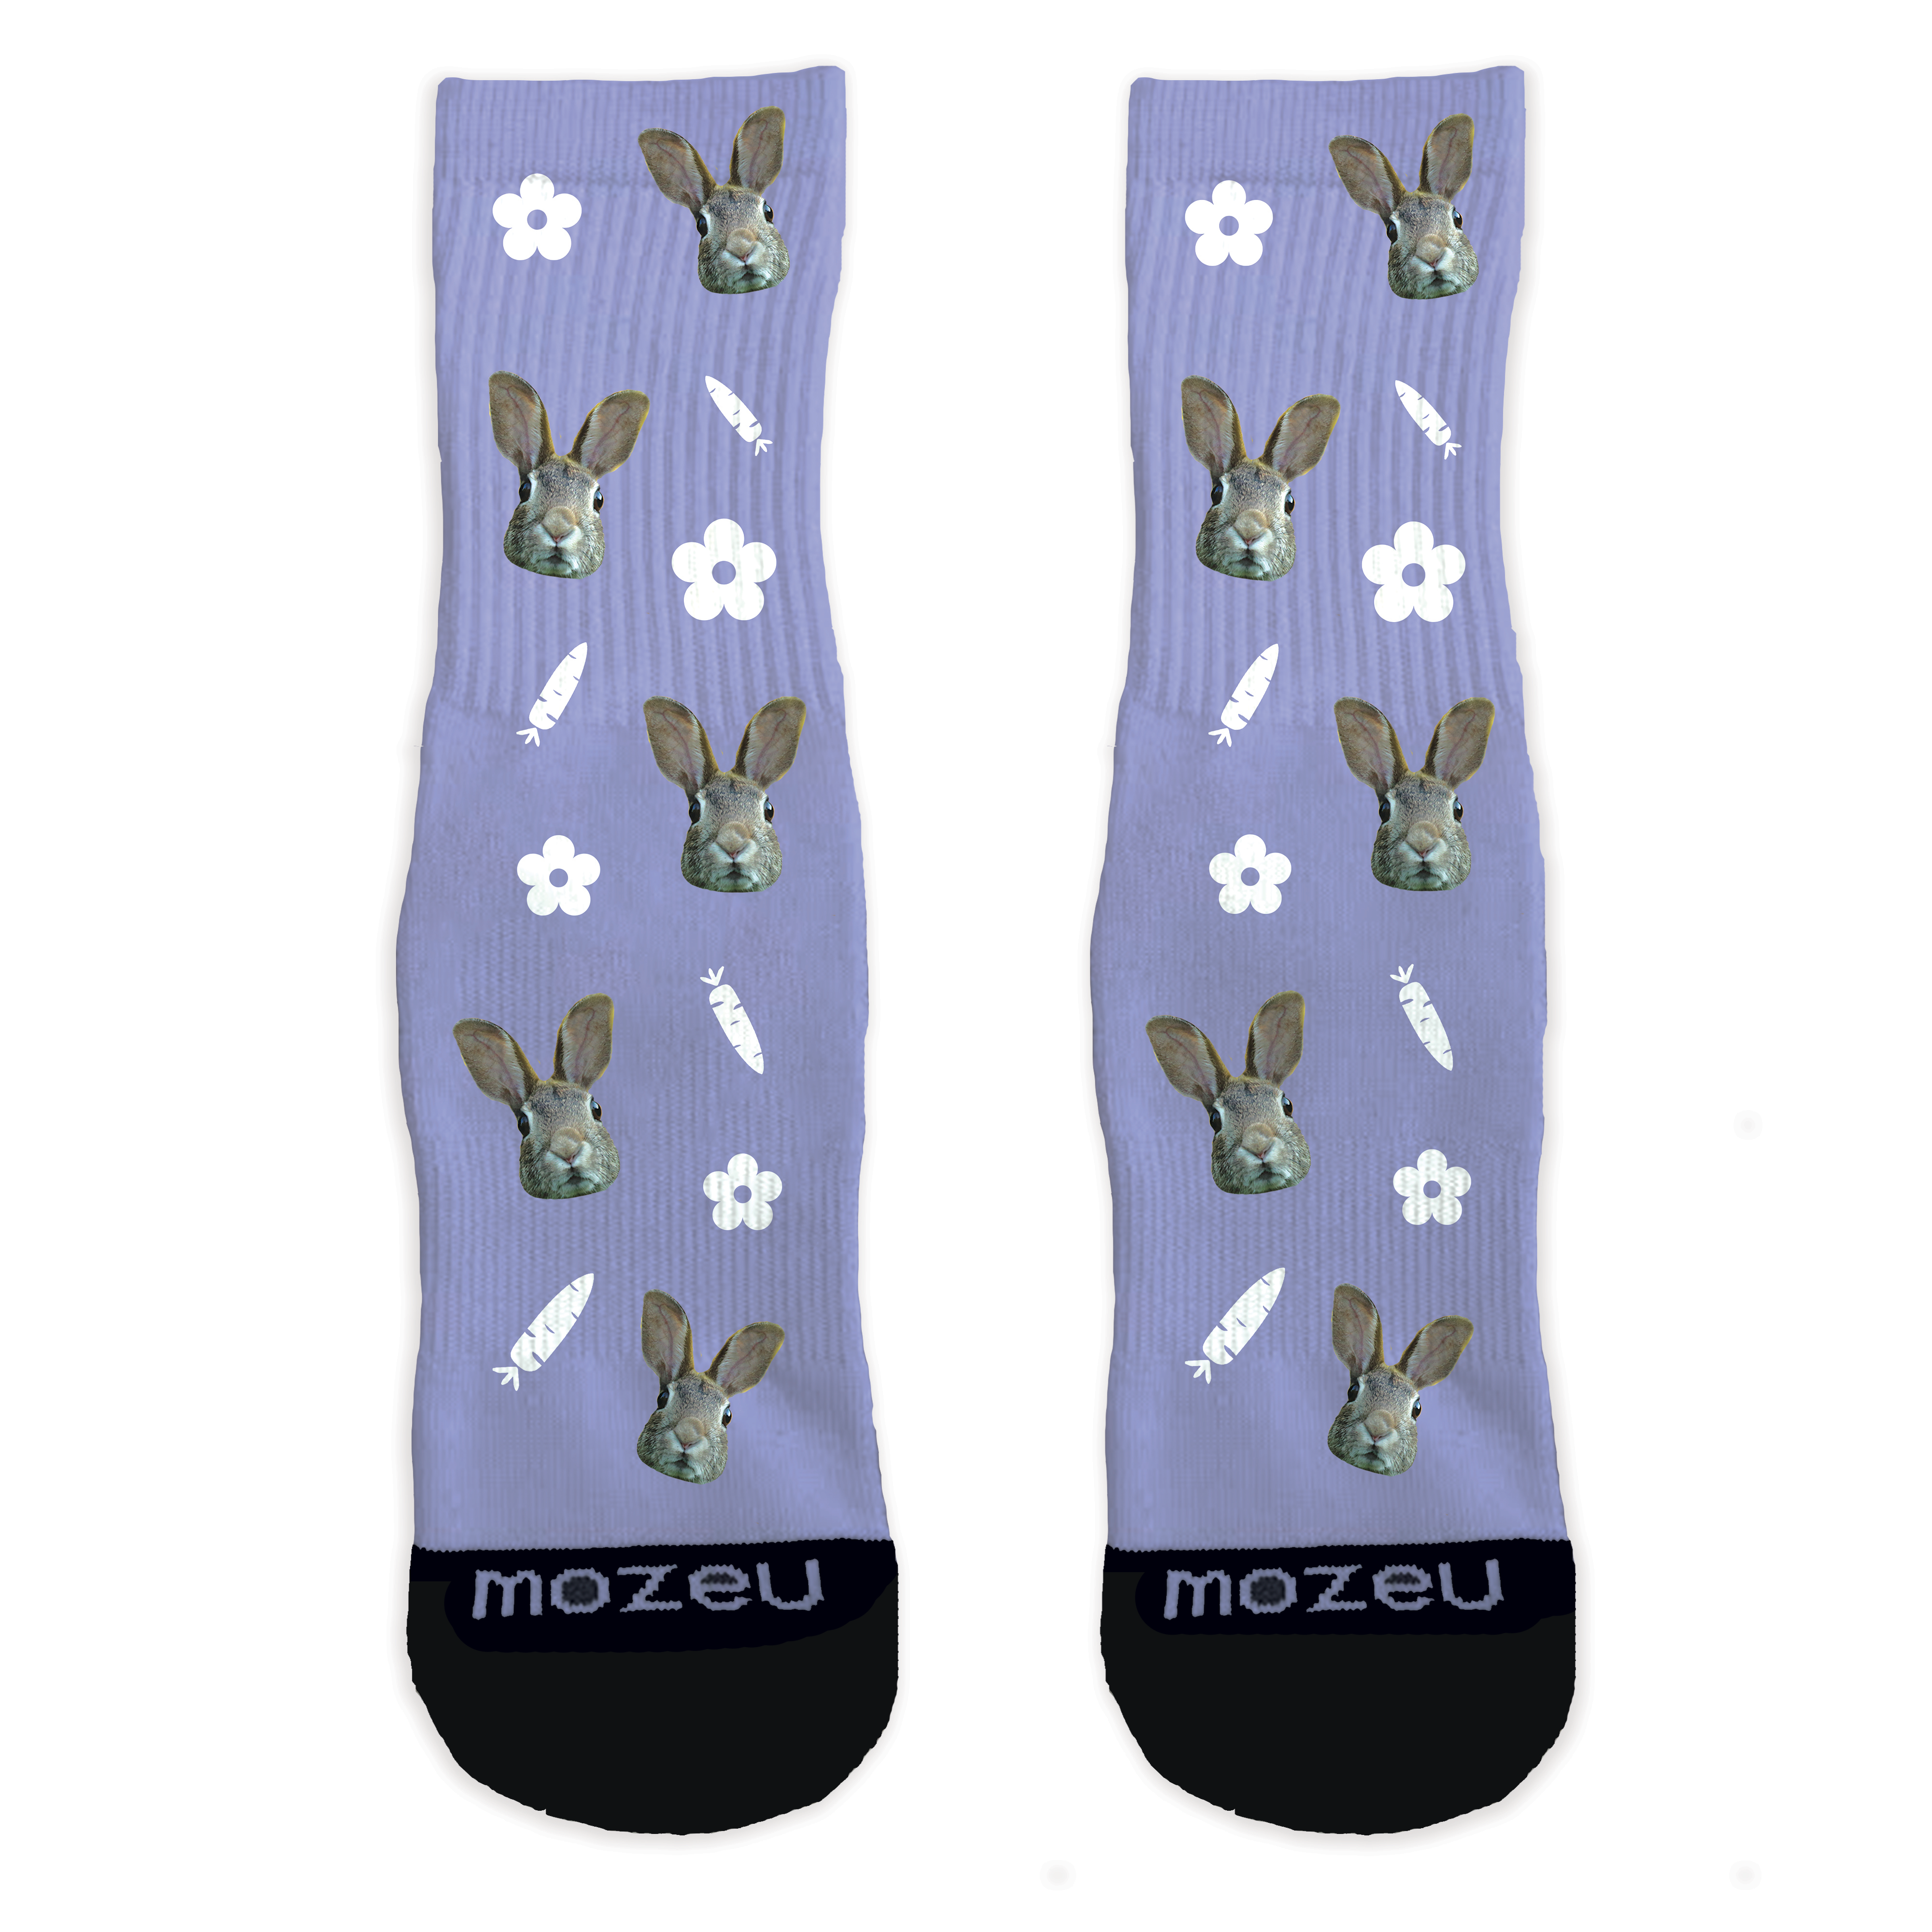 Custom Bunny Socks